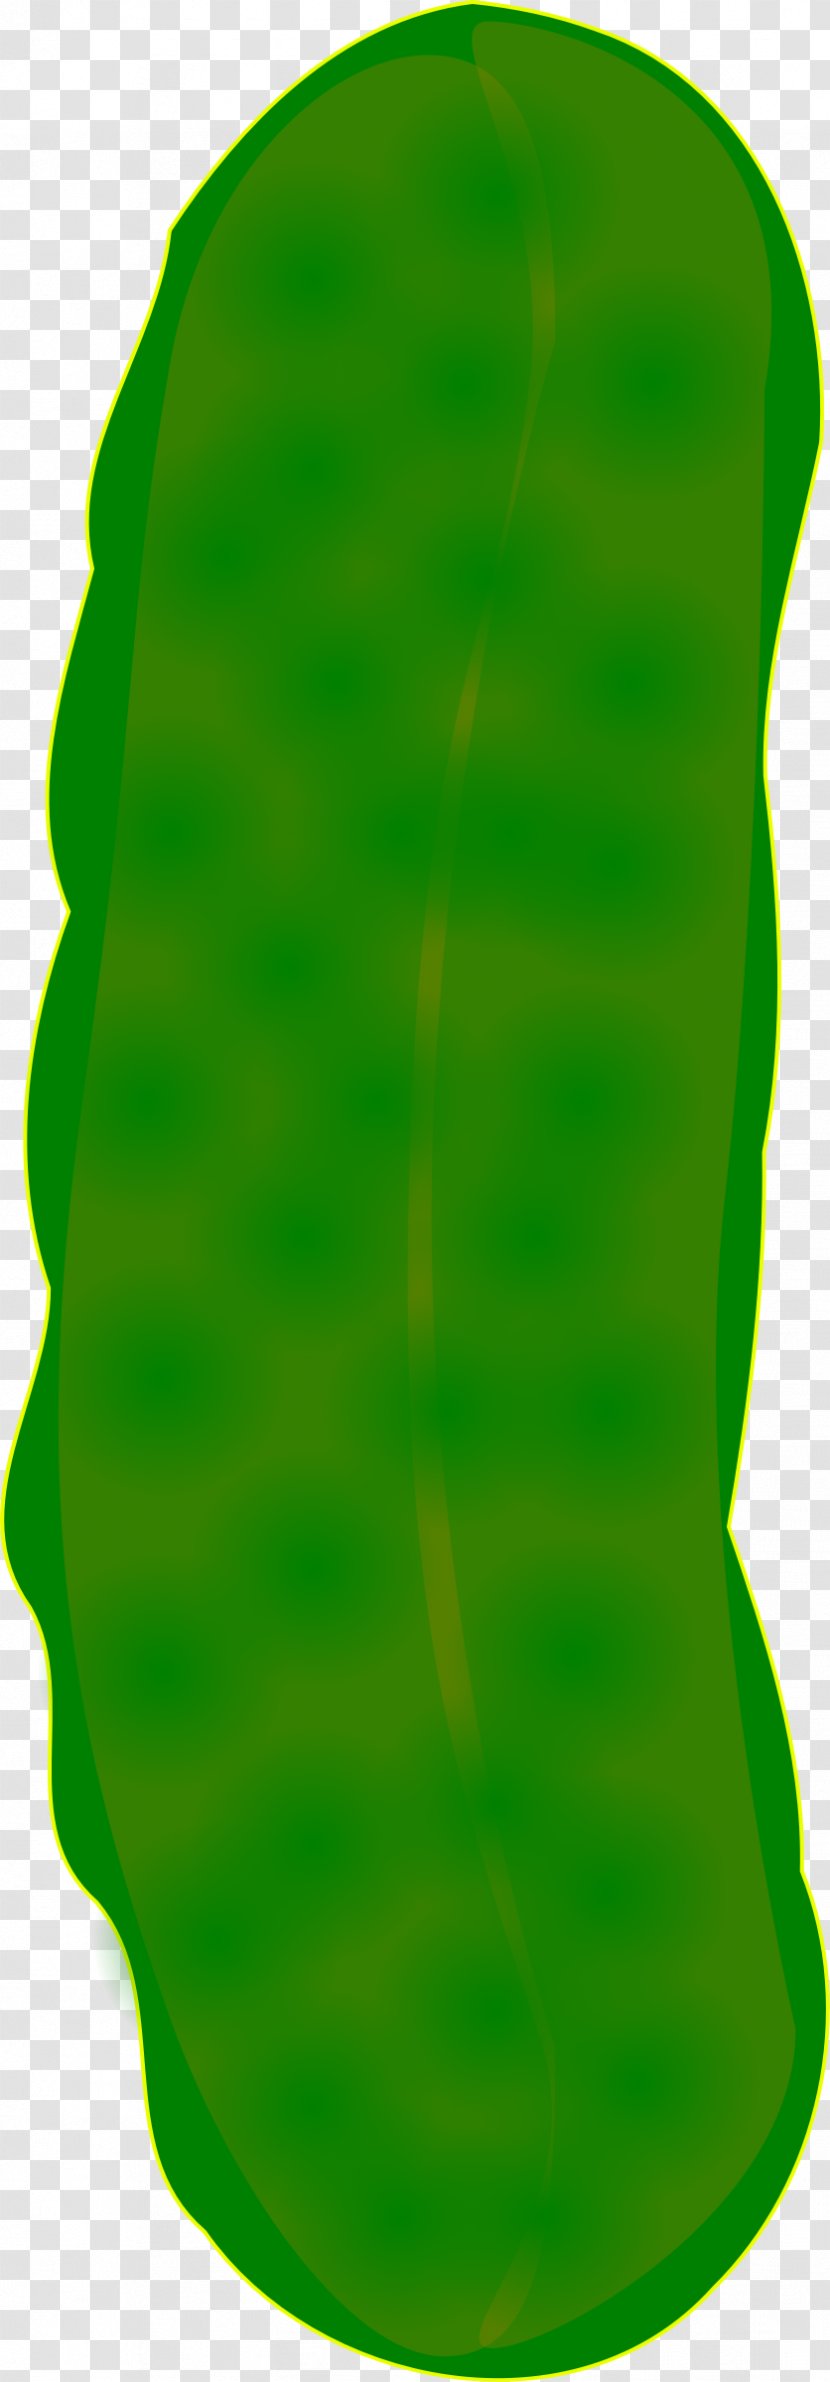 Pickled Cucumber Jar Clip Art - Dill Pickle Pictures Transparent PNG